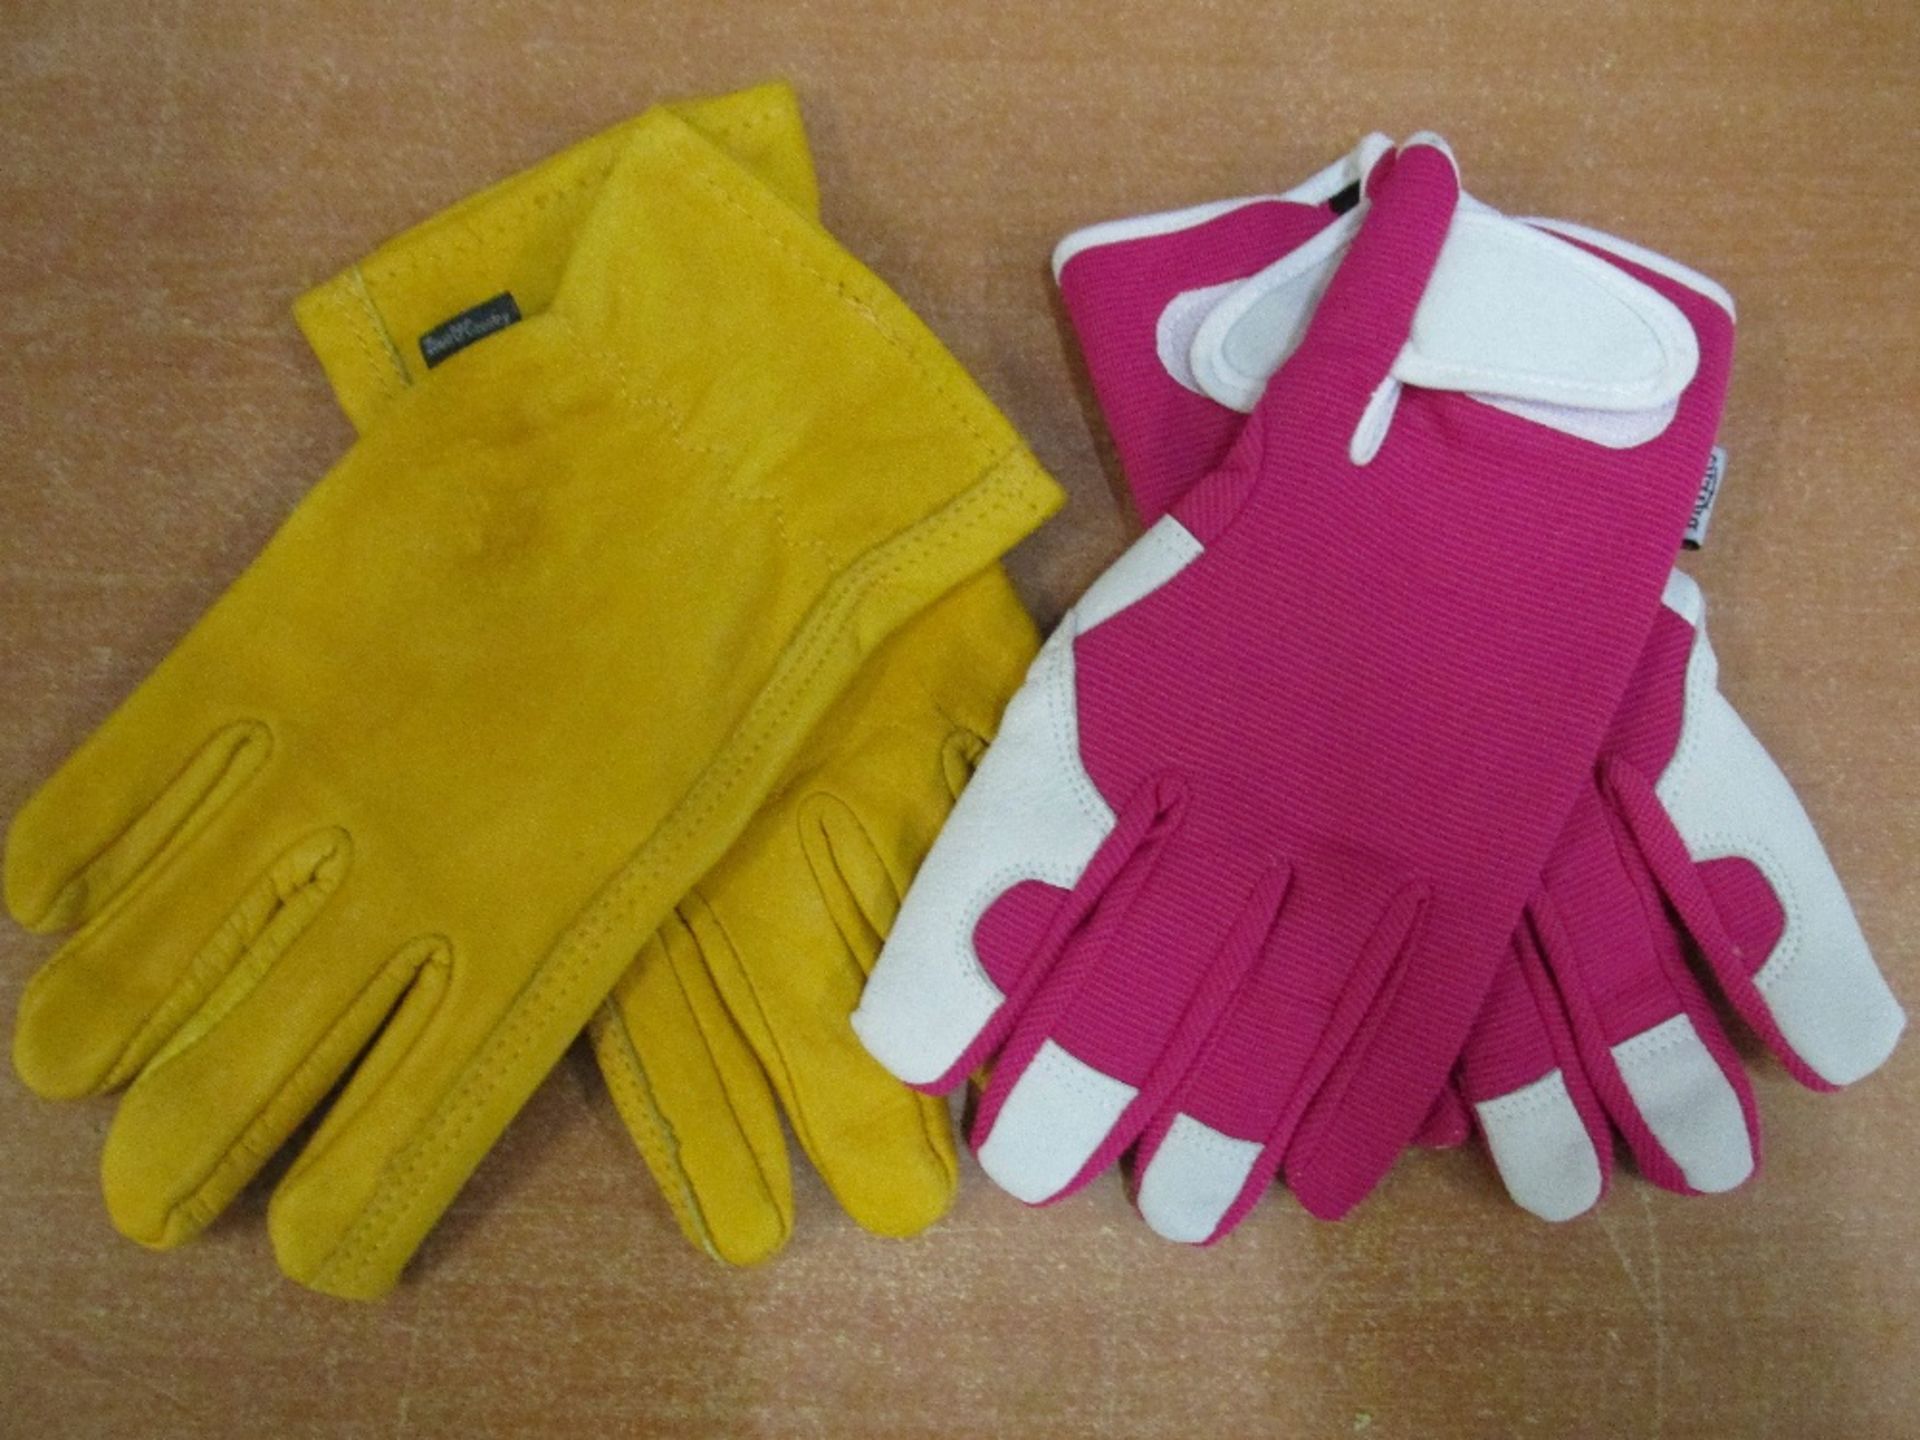 2 Pairs of Gardening Gloves ++